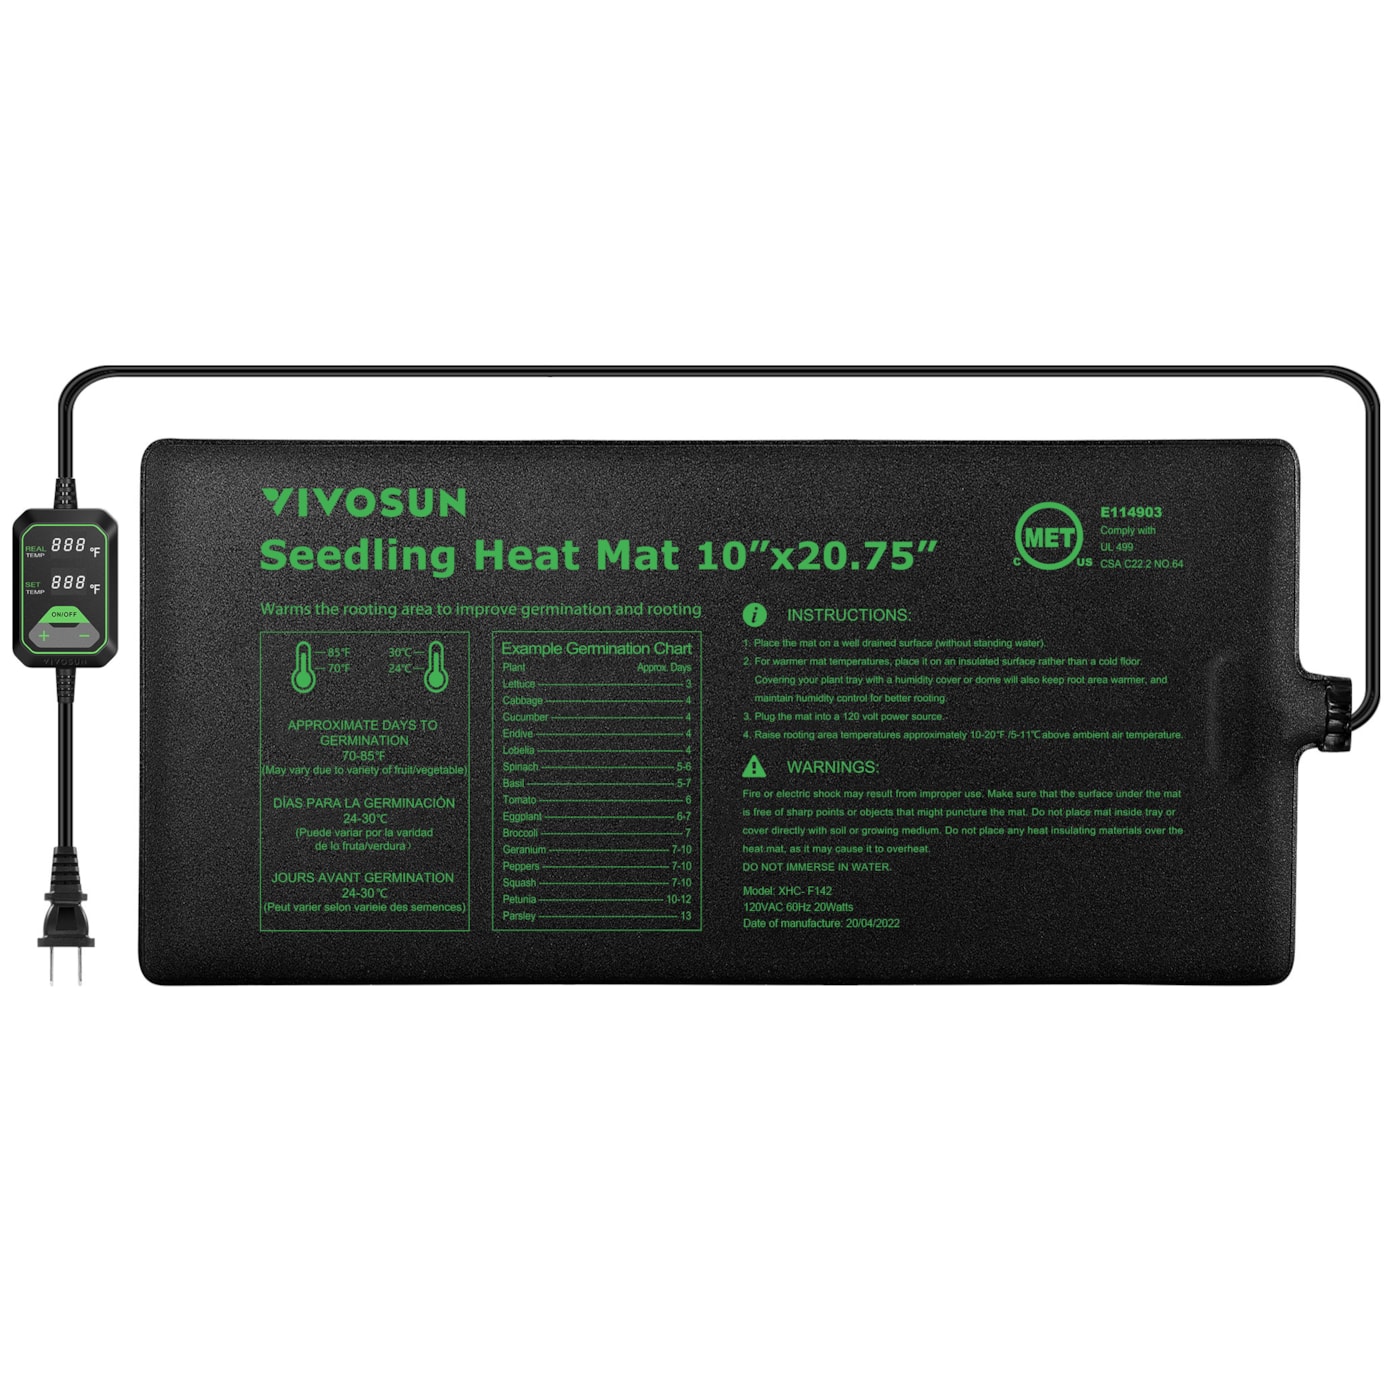 VIVOSUN Seedling Heat Mat with Dual Digital Display Thermostat, 10" x 20.75" Black Warm Hydroponic Heating Pad for Seed Germination